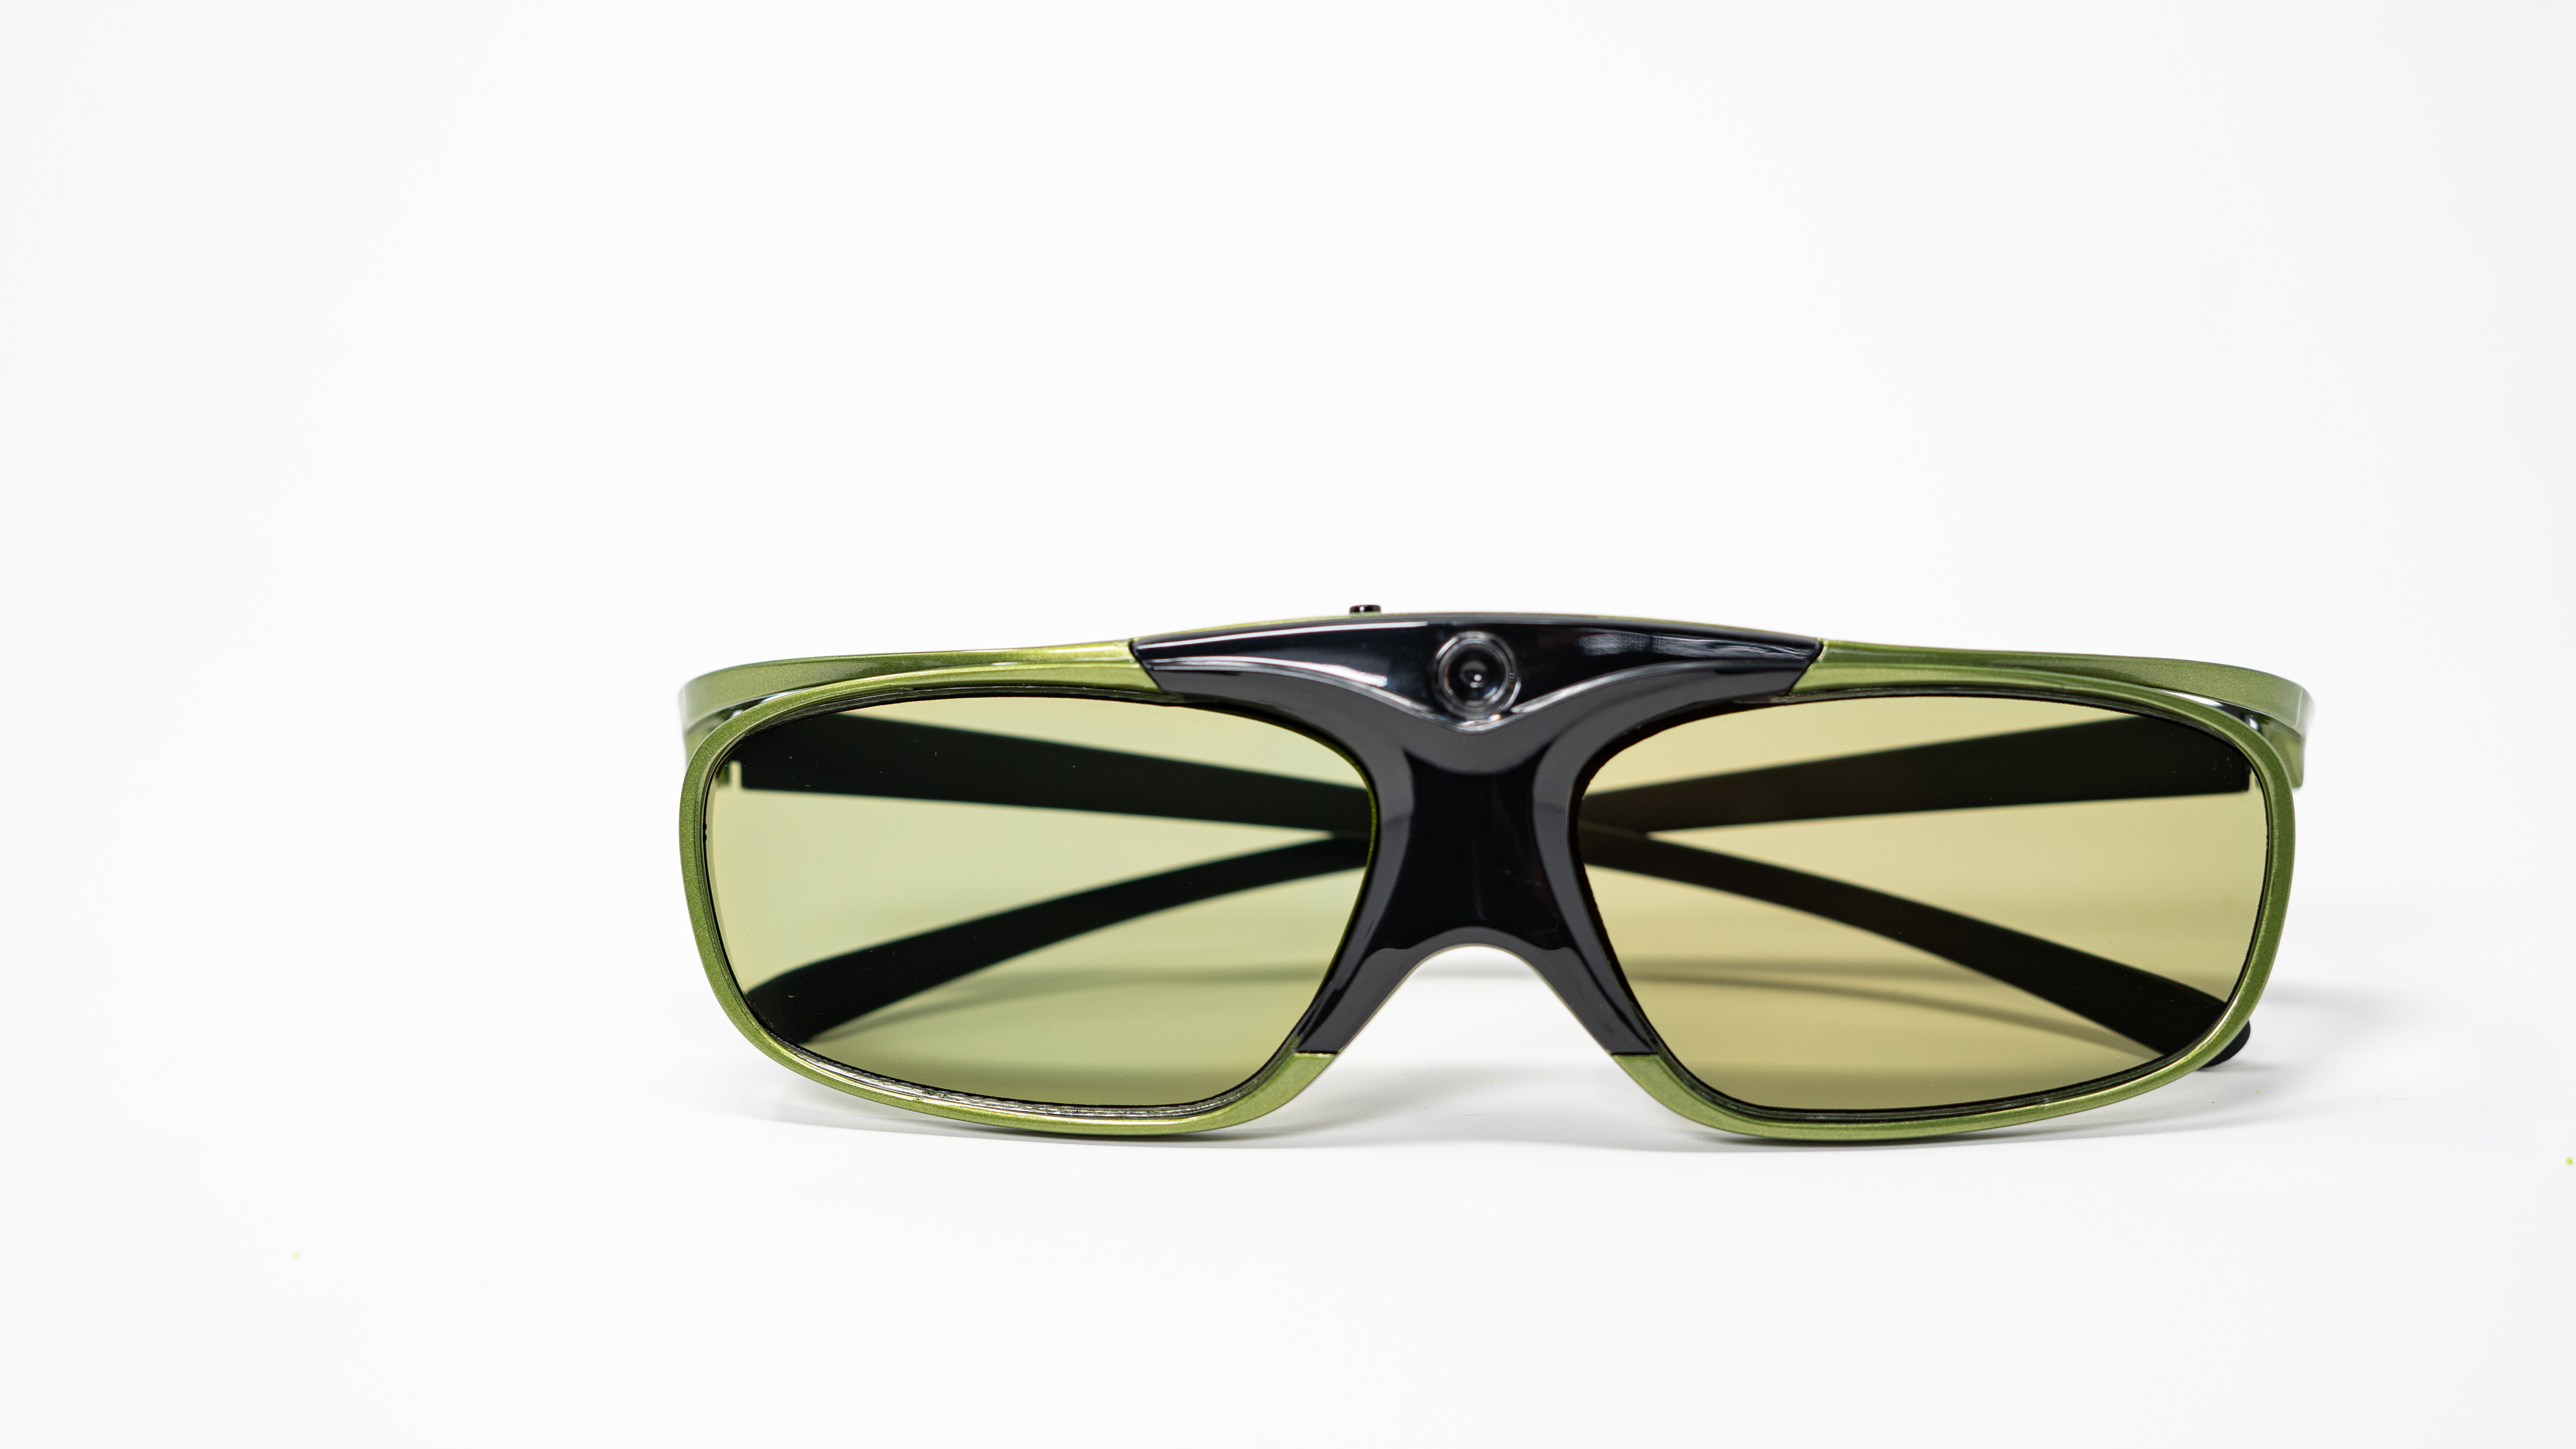 wiederaufladbar DLP 3D - DLP LINK - für DLP Brille HI-SHOCK grün - Heaven Lime Pro Beamer 3D